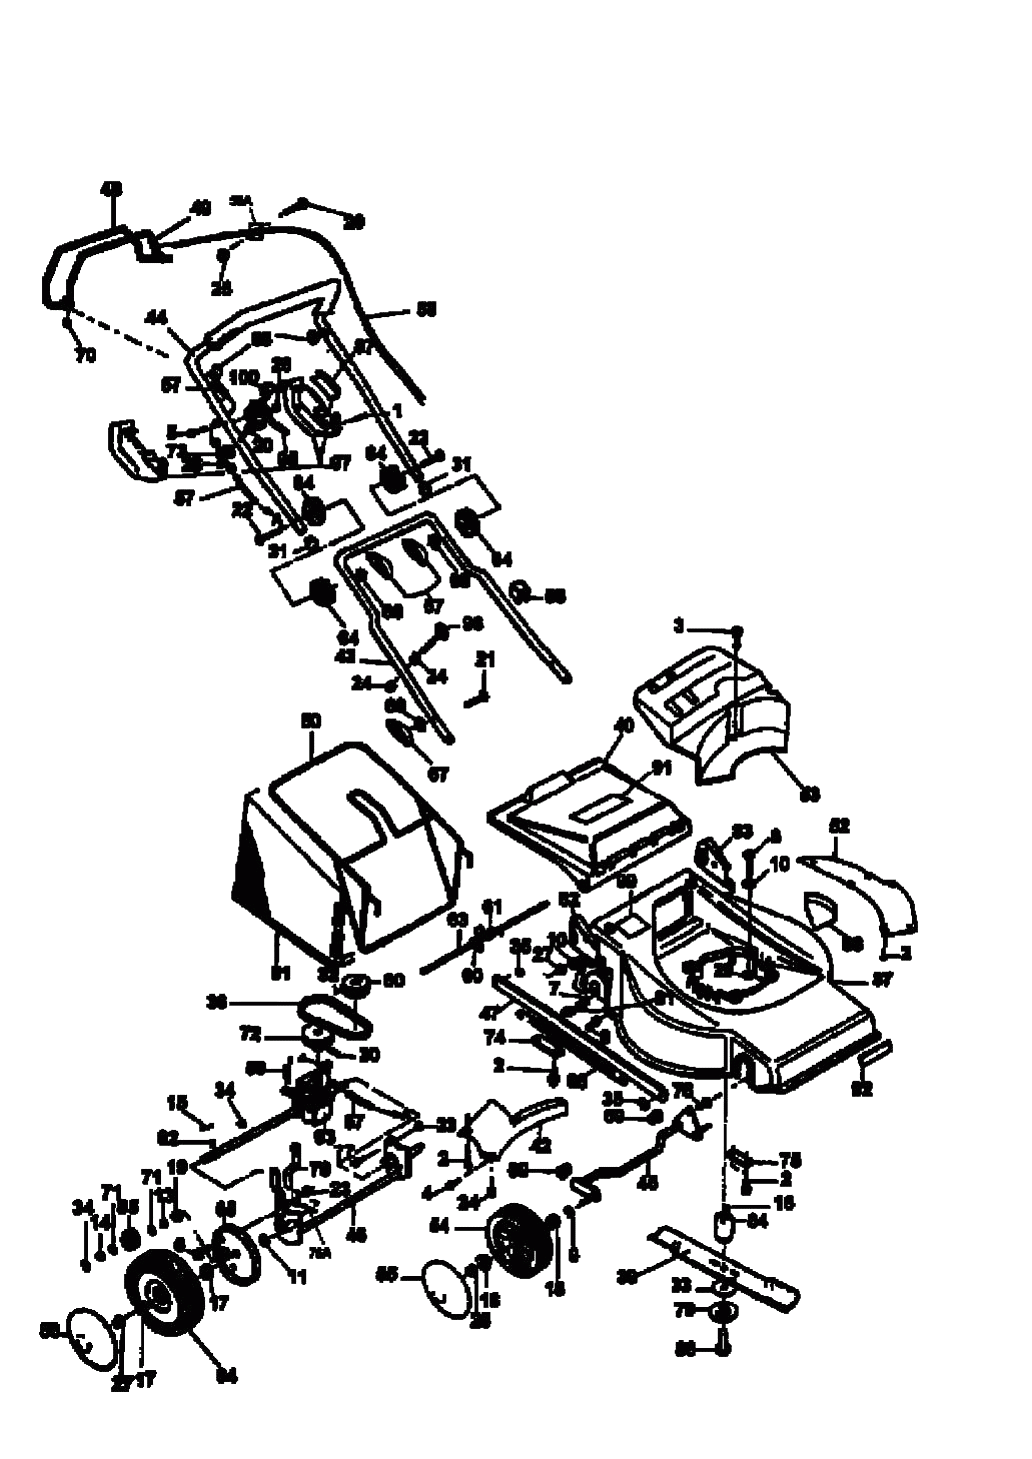 MTD Артикул GX50SB678 (год выпуска 1998). Основная деталировка